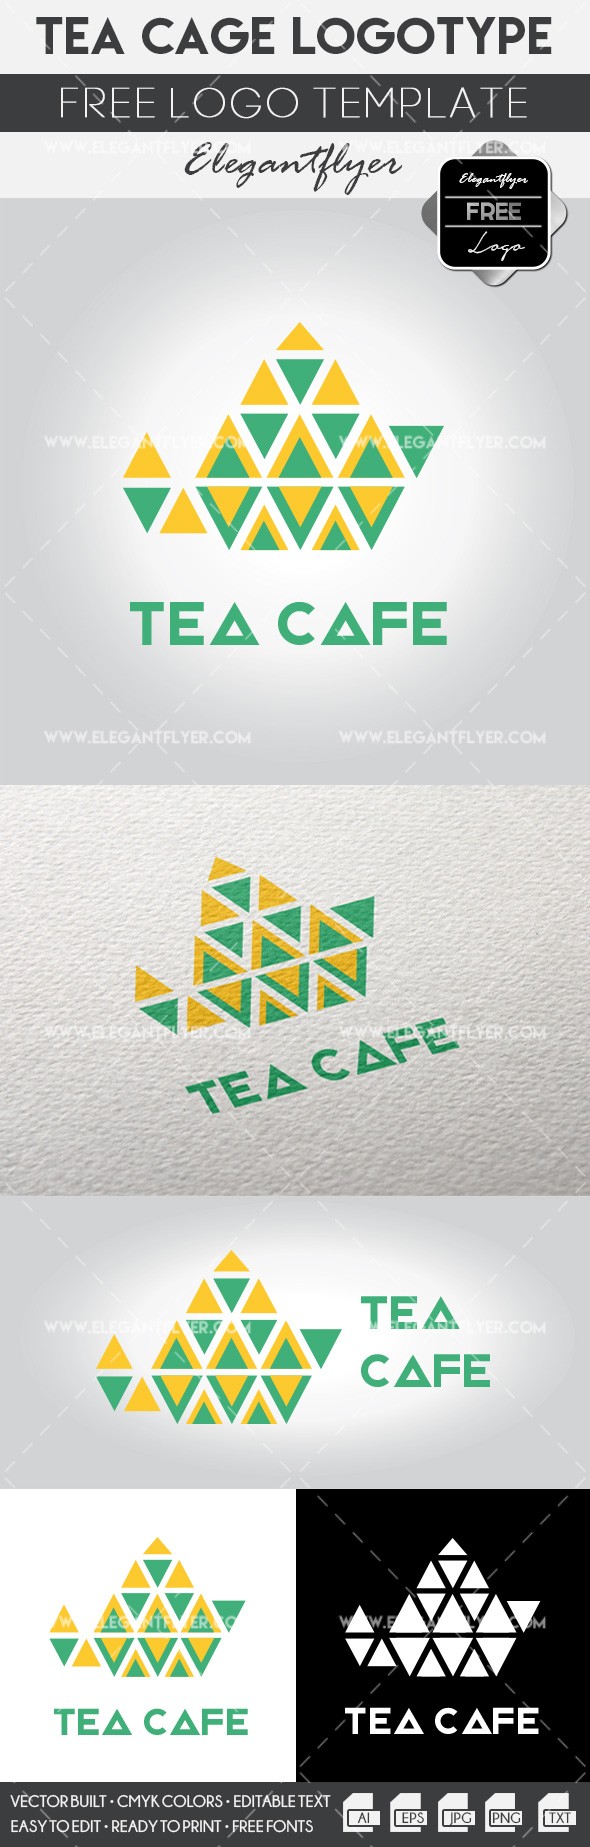 Café de chá by ElegantFlyer